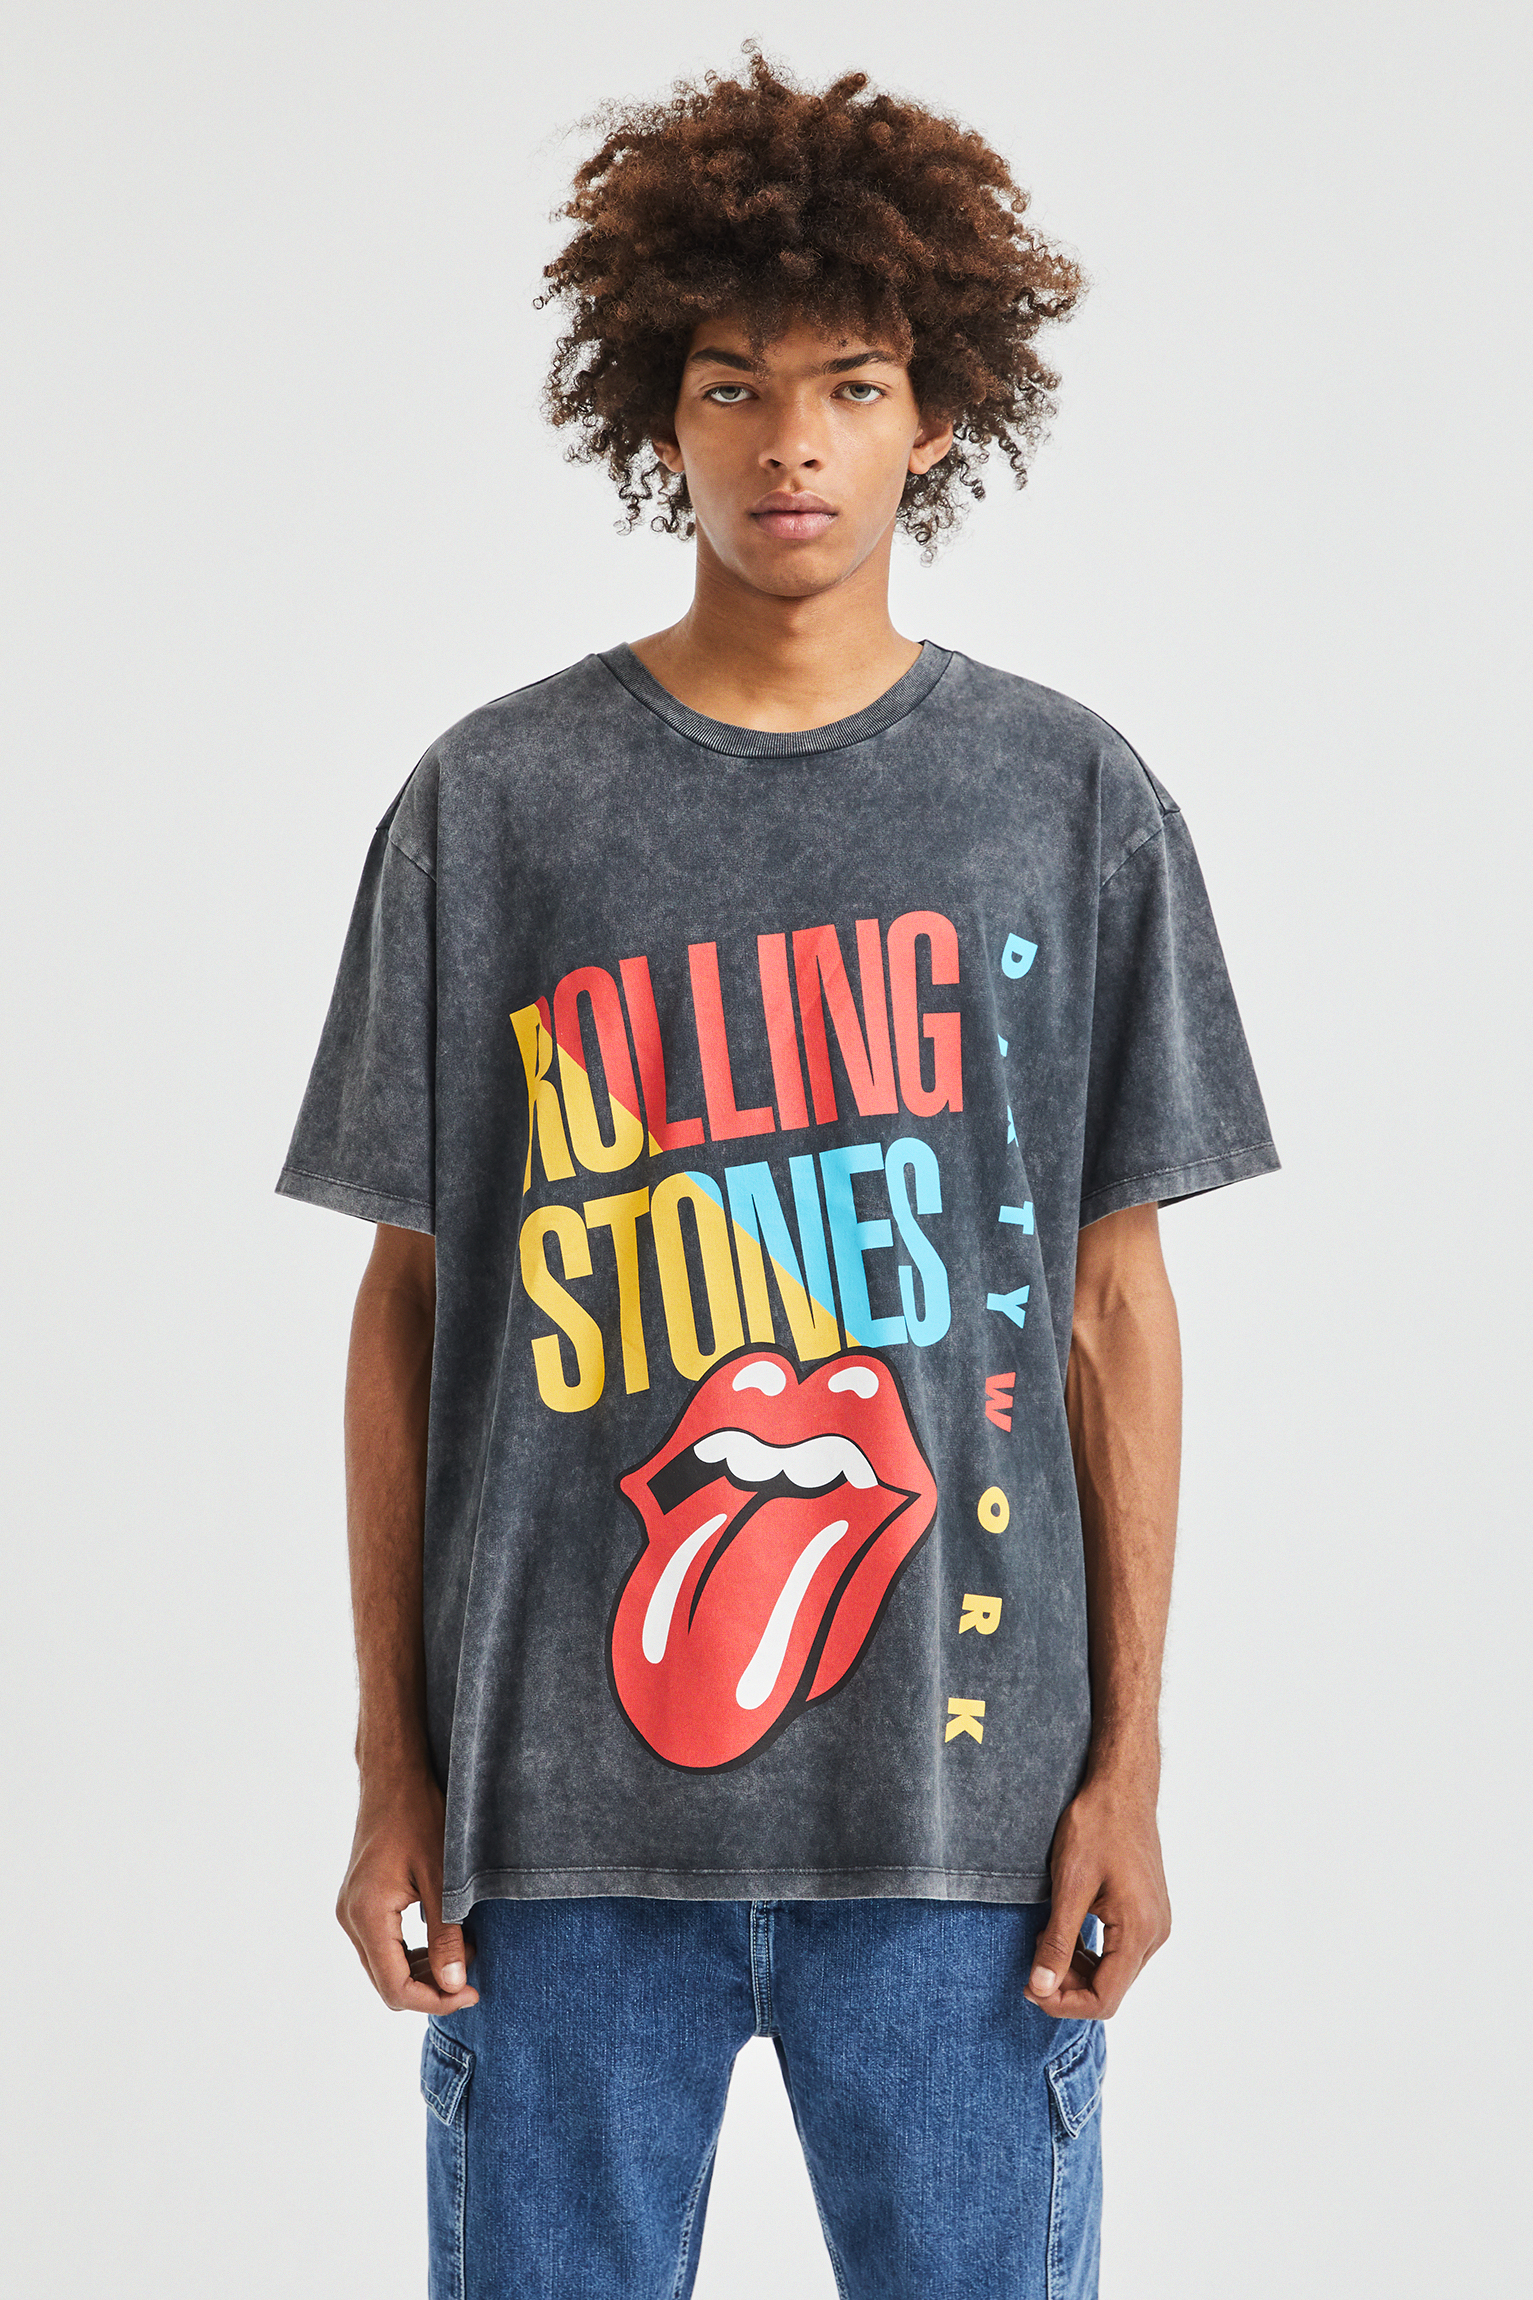 rolling stones t shirt